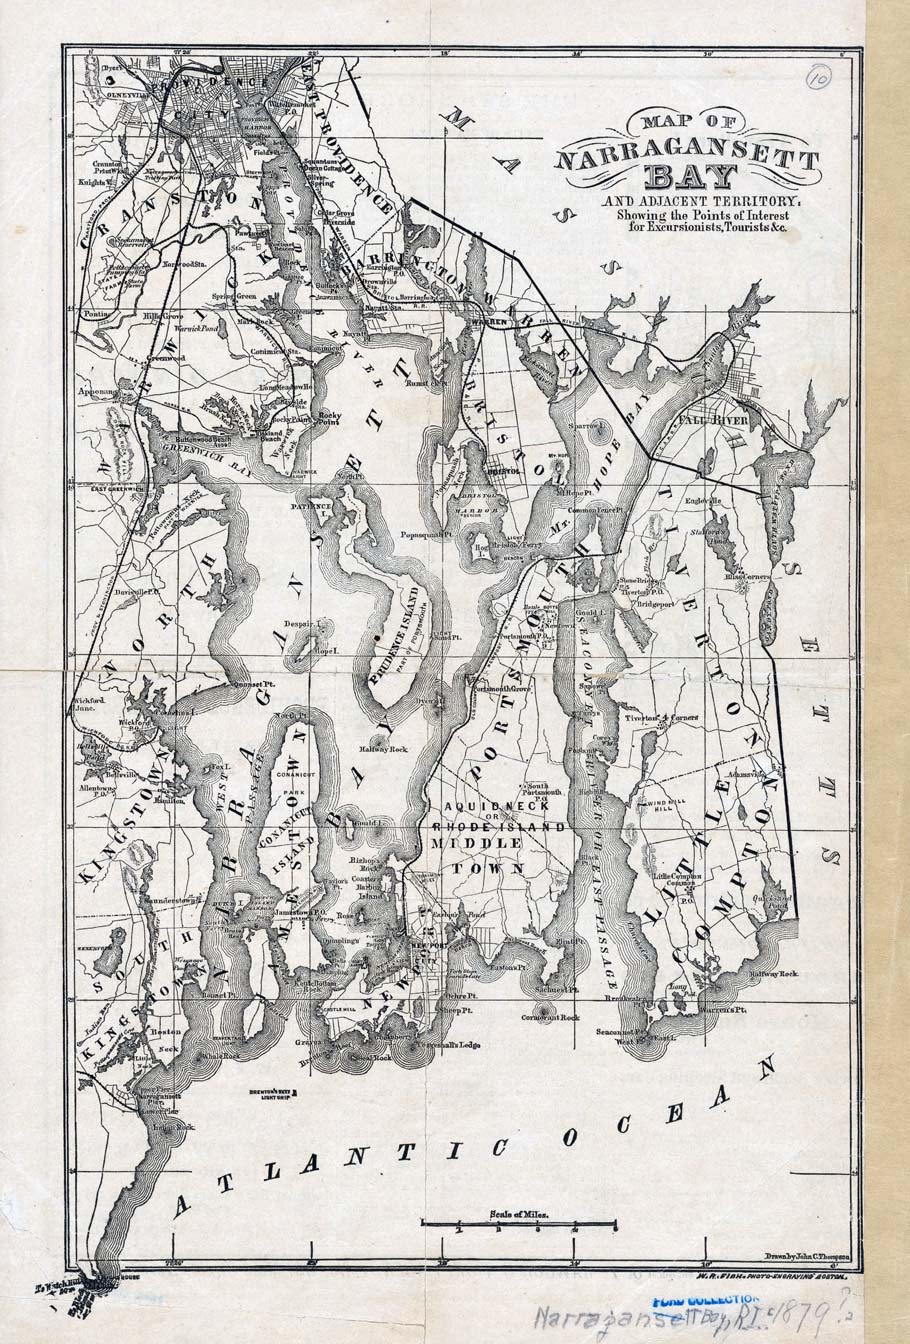  Map of Narragansett Bay and adjacent territory - 1879